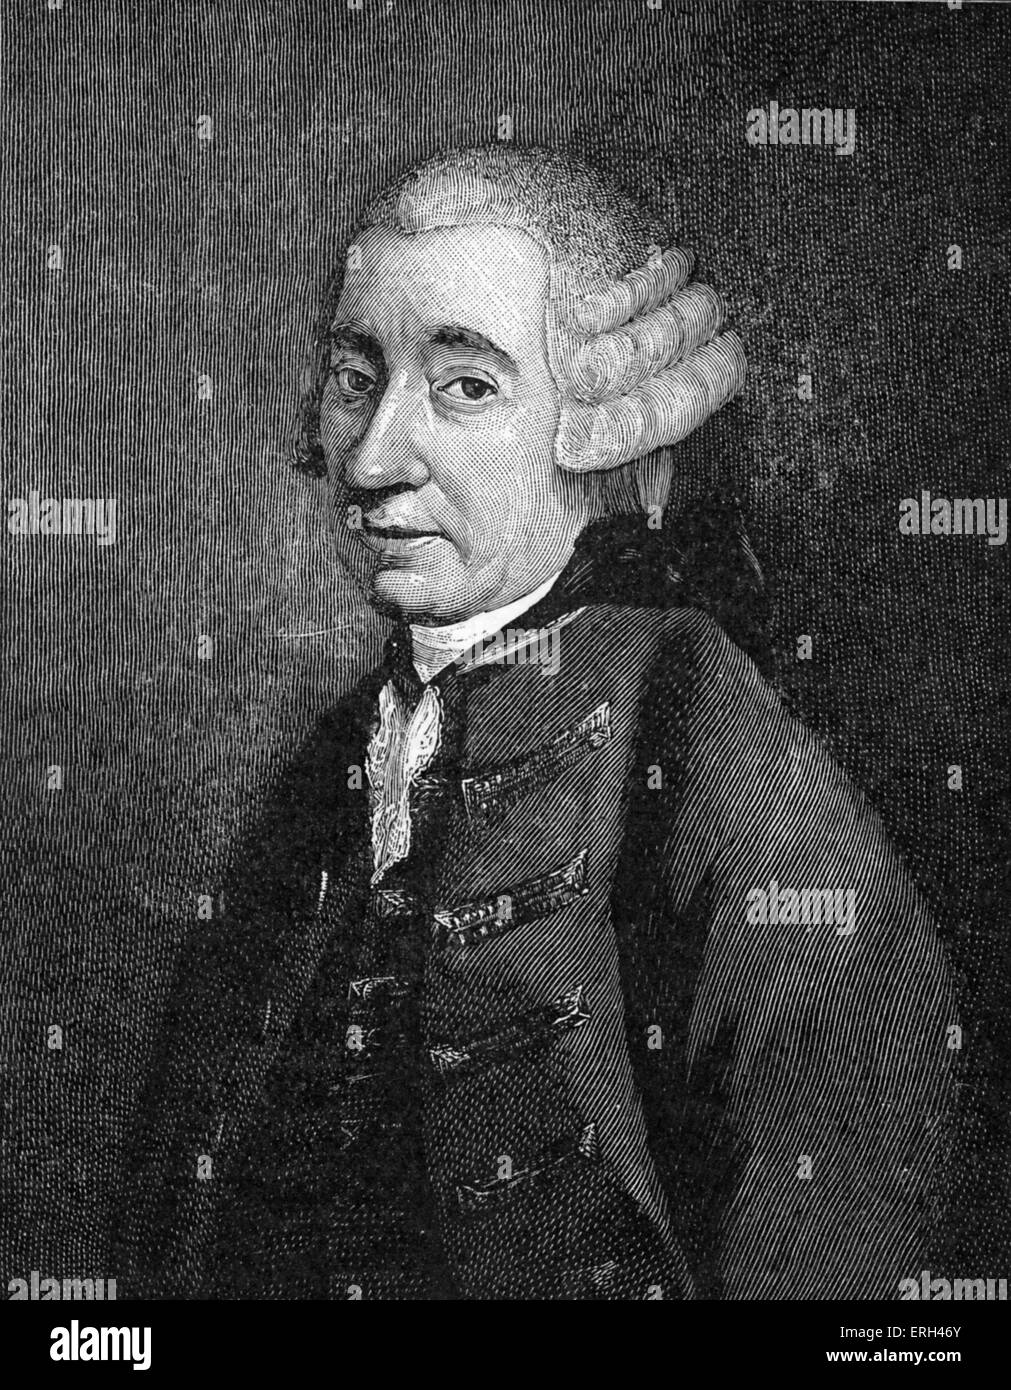 Tobias Smollett, c. 1770portrait of the Scottish poet and author, 19 March 1721 – 17 September 1771. Stock Photo